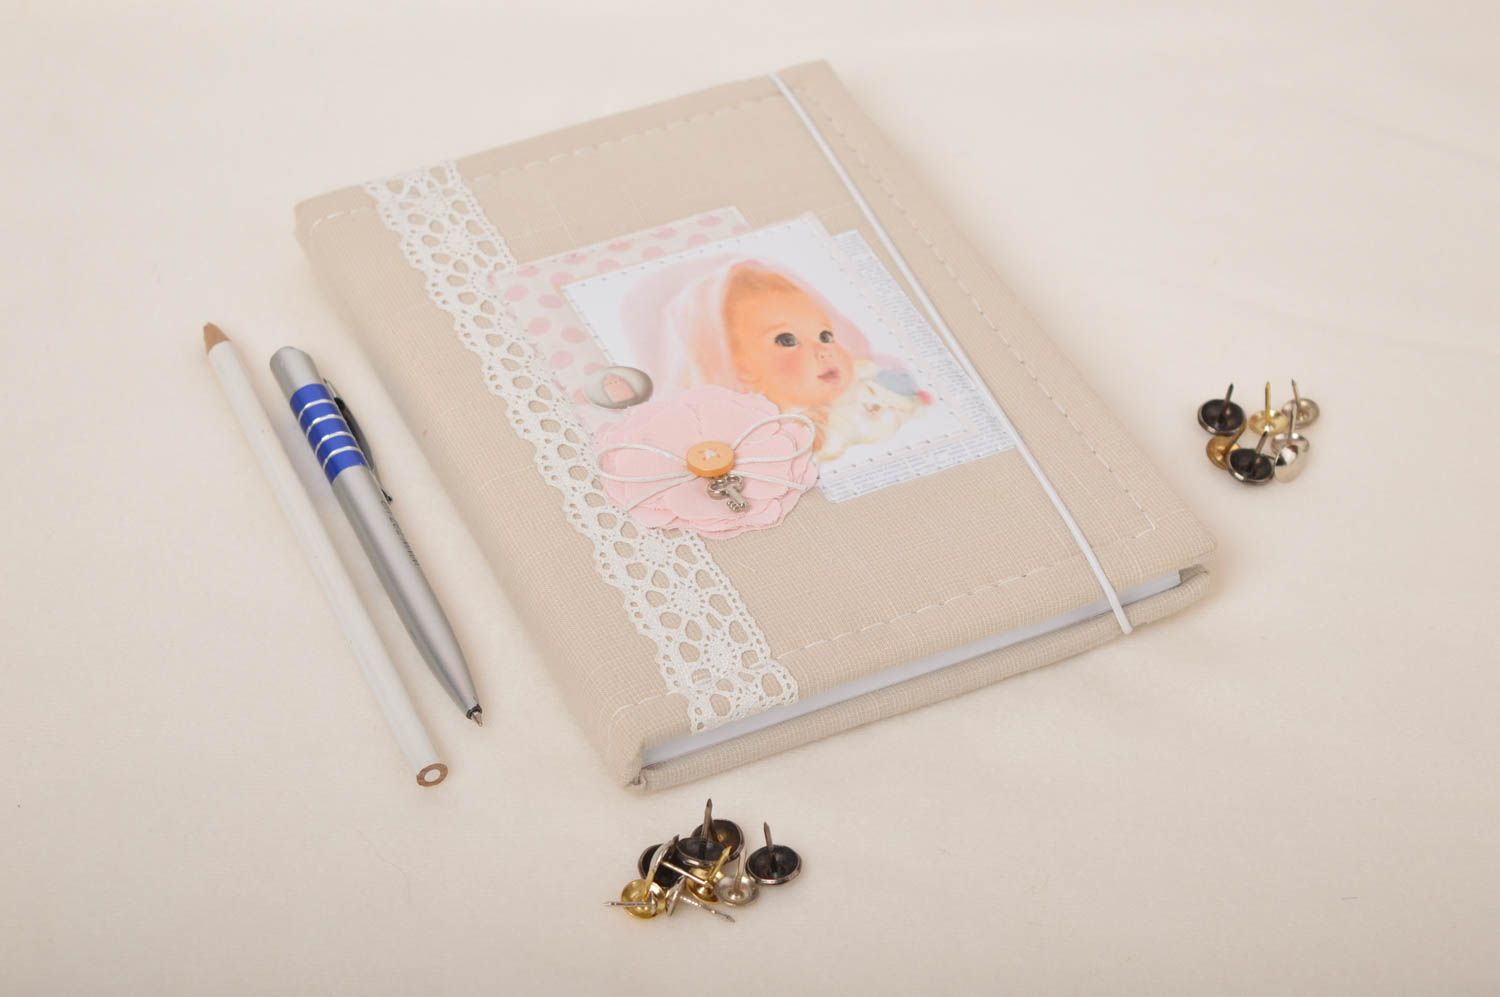 Handmade notebook designer notebook gift ideas unusual gift for girls photo 1